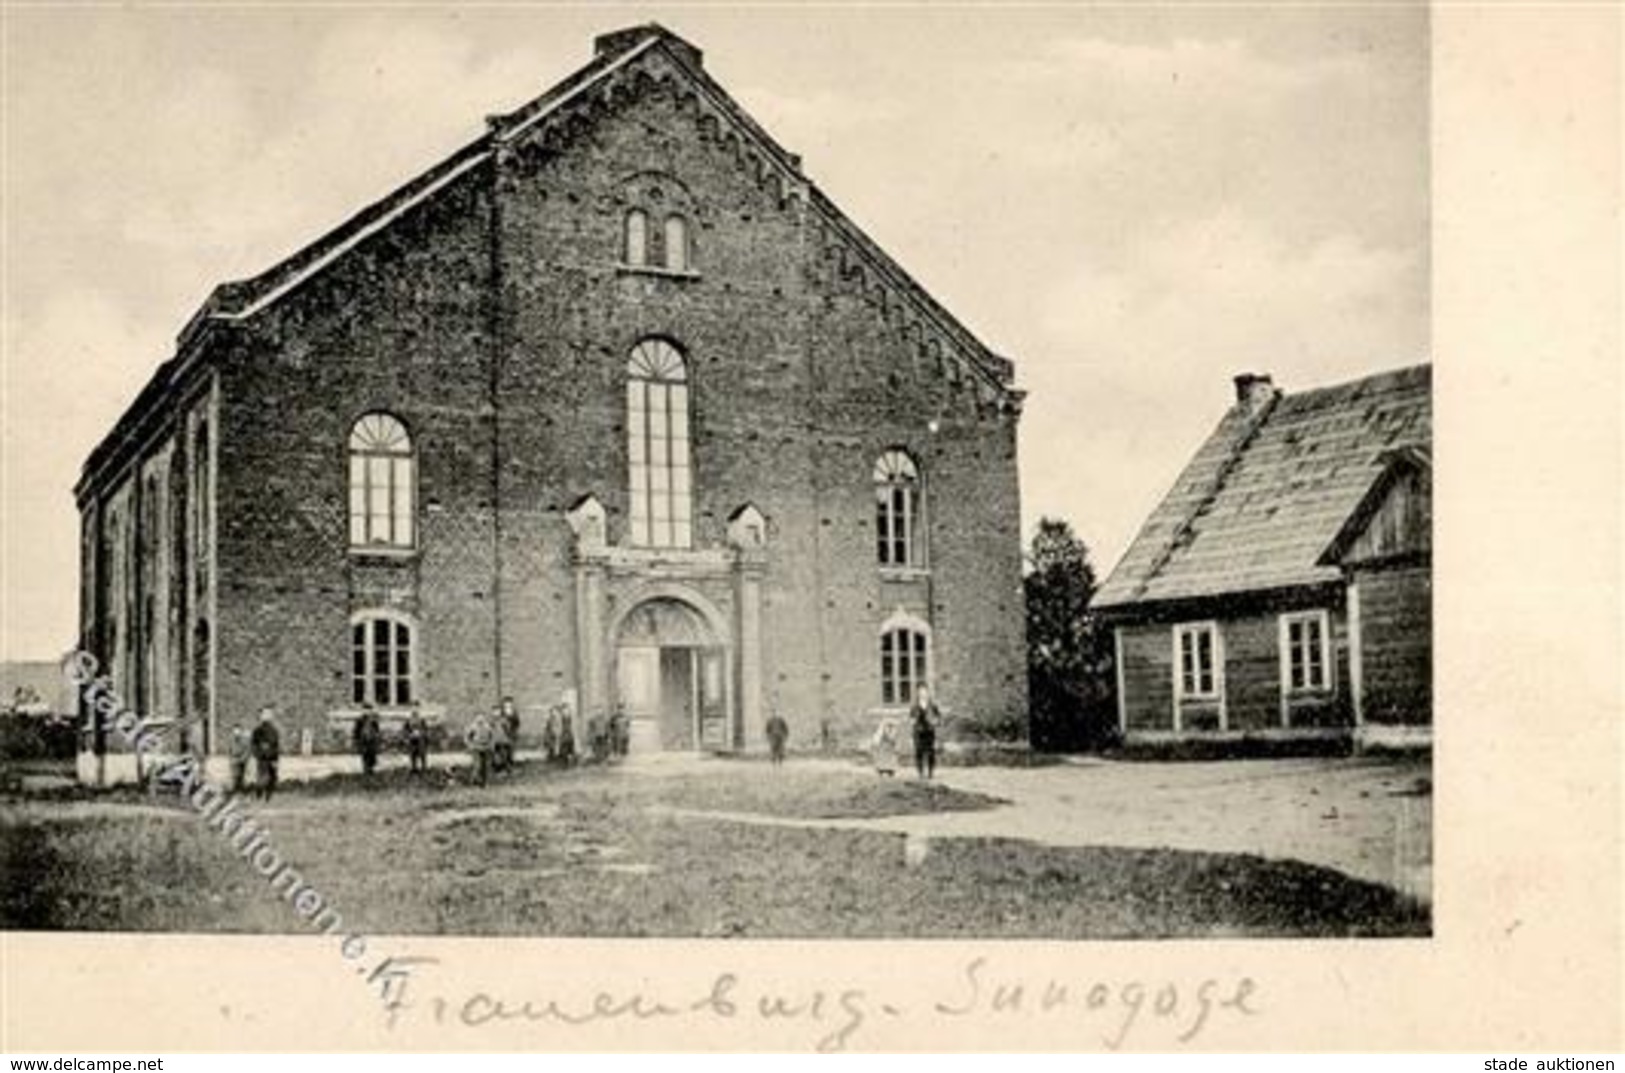 Synagoge FRAUENBURG,Masuren - I Synagogue - Jewish